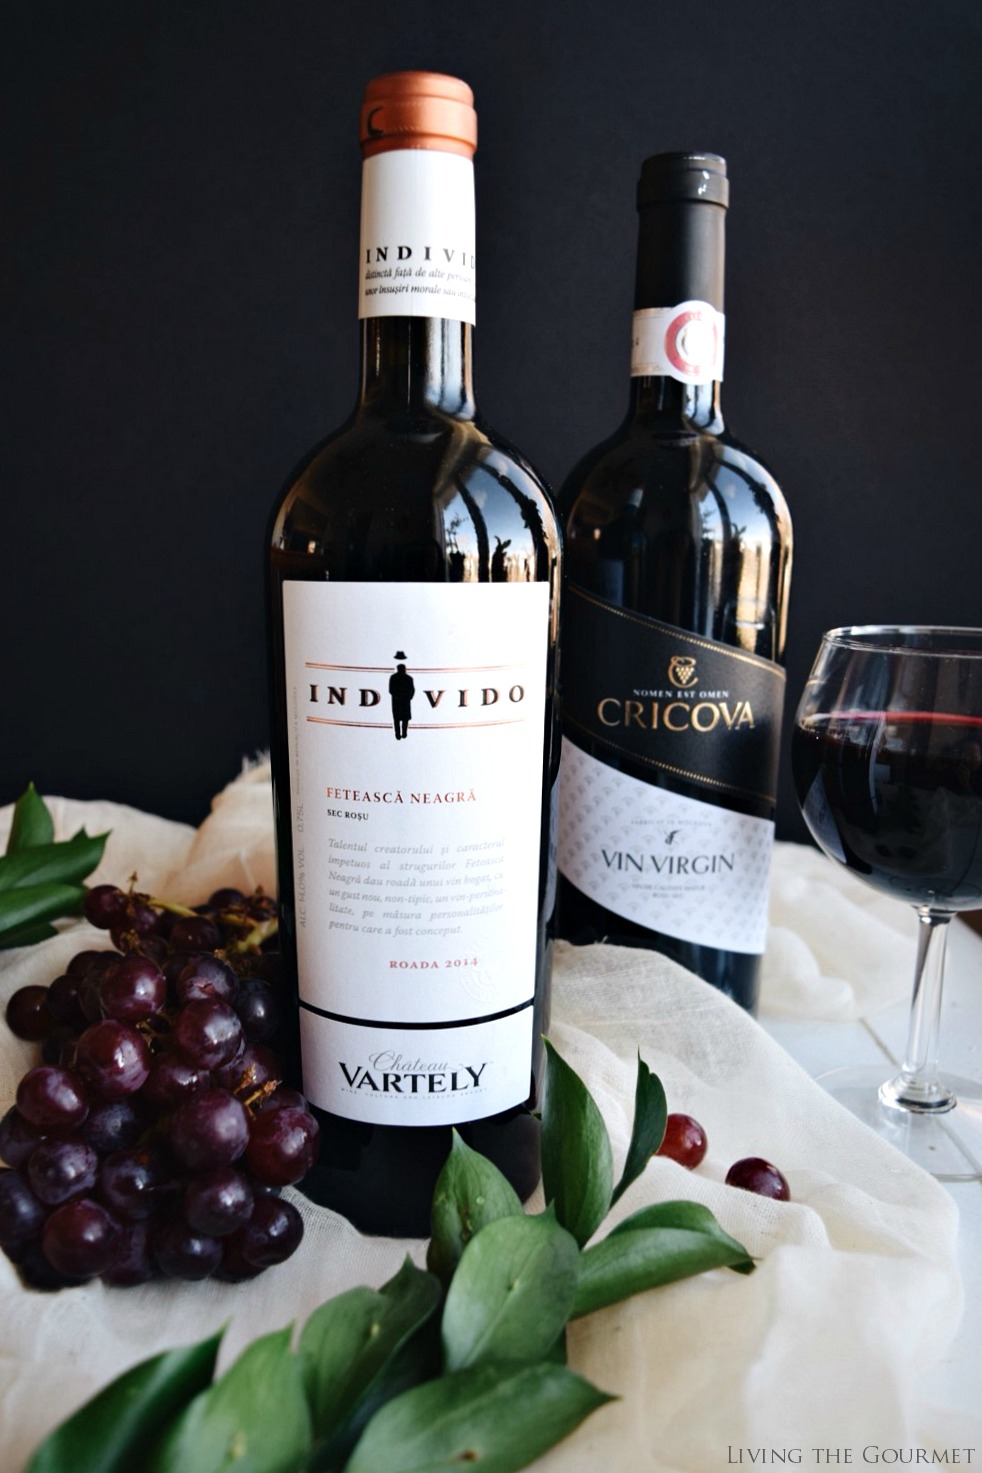 Living the Gourmet: Wines of Maldova